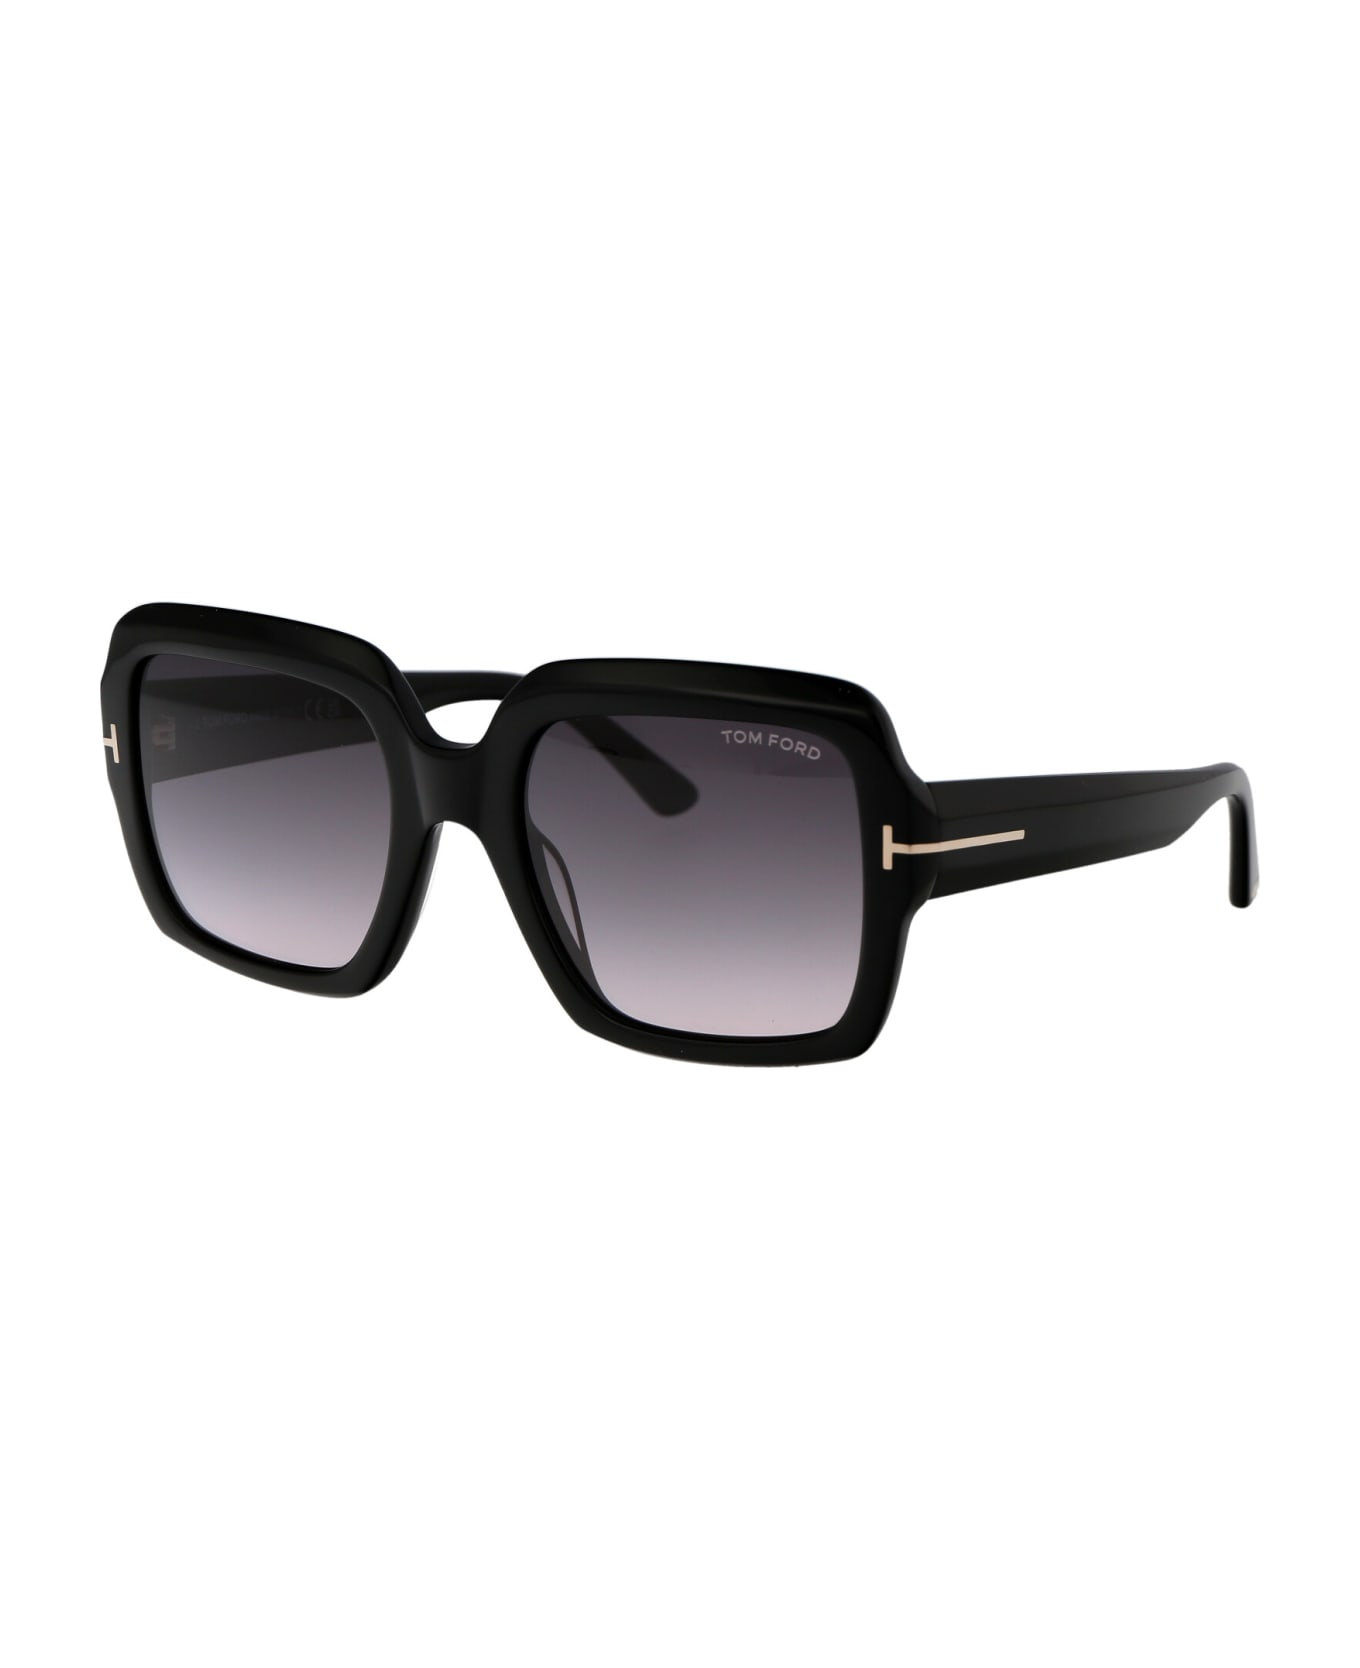 Tom Ford Eyewear Kaya Sunglasses - 01B Nero Lucido / Fumo Grad